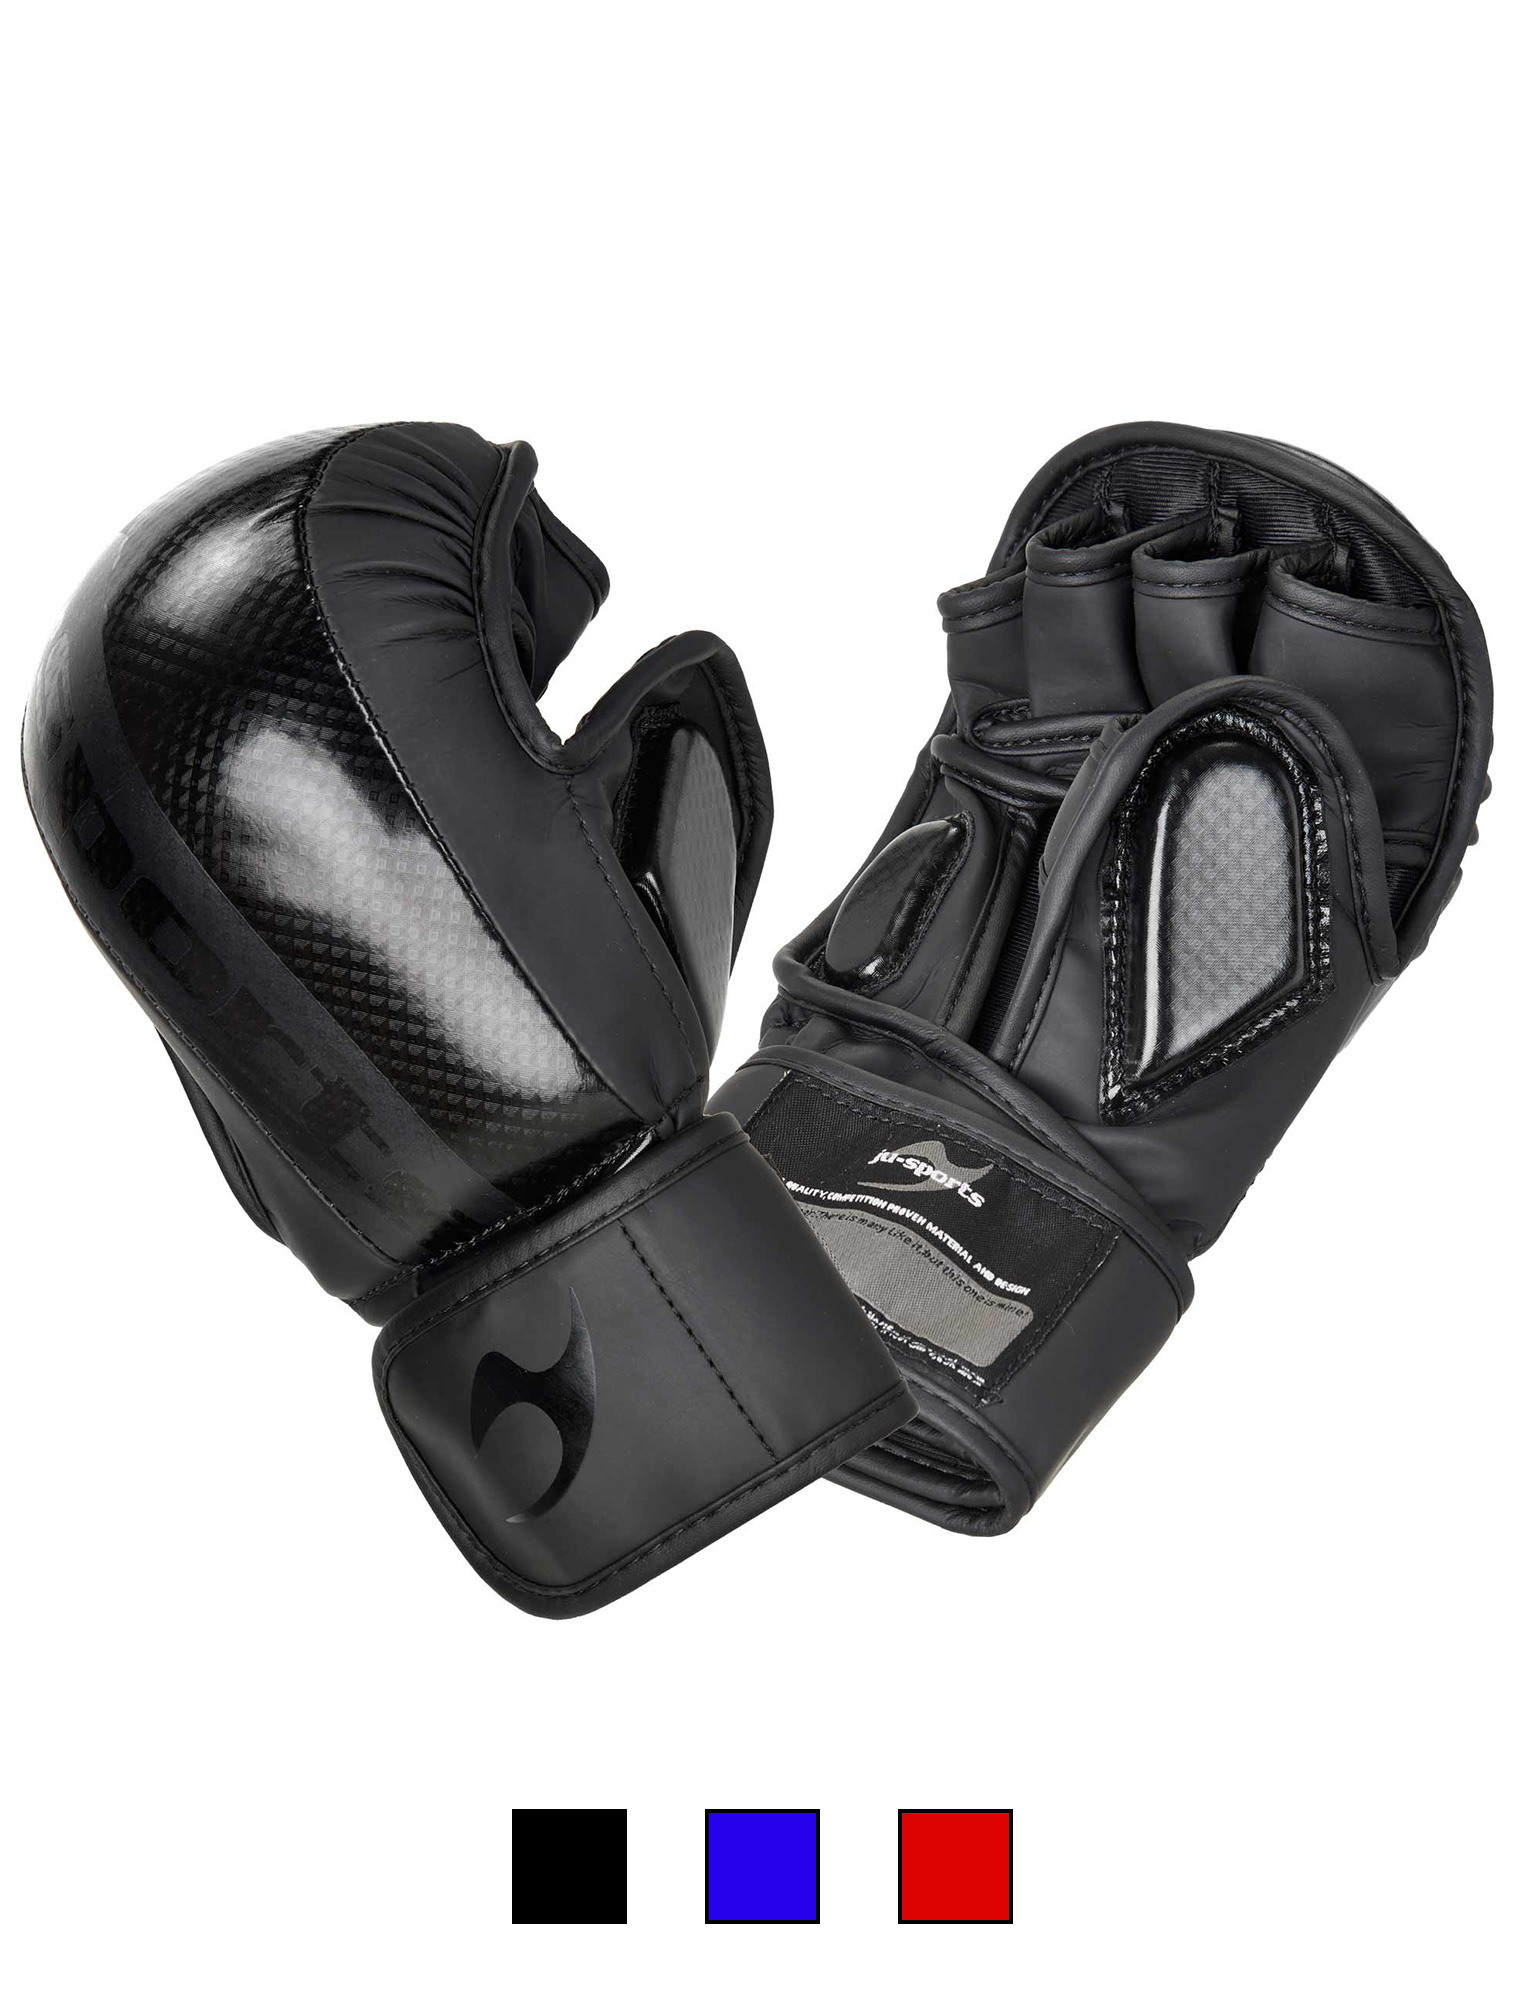 MMA Sparring Glove Carbon Assassin black